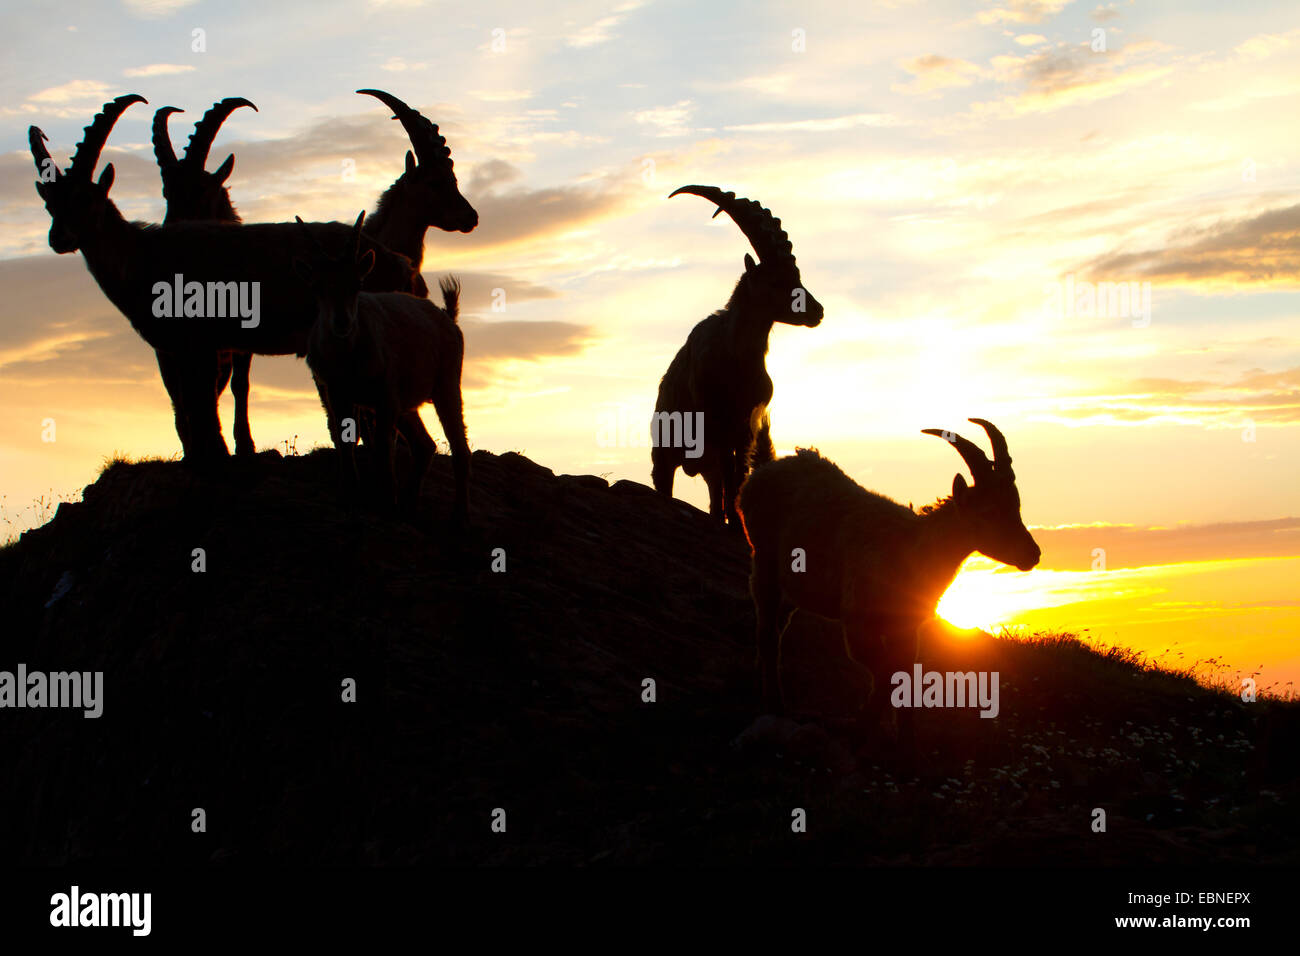 Alpine ibex (Capra ibex, Capra ibex ibex), silhouette of a group against sunrise, Switzerland, Alpstein Stock Photo